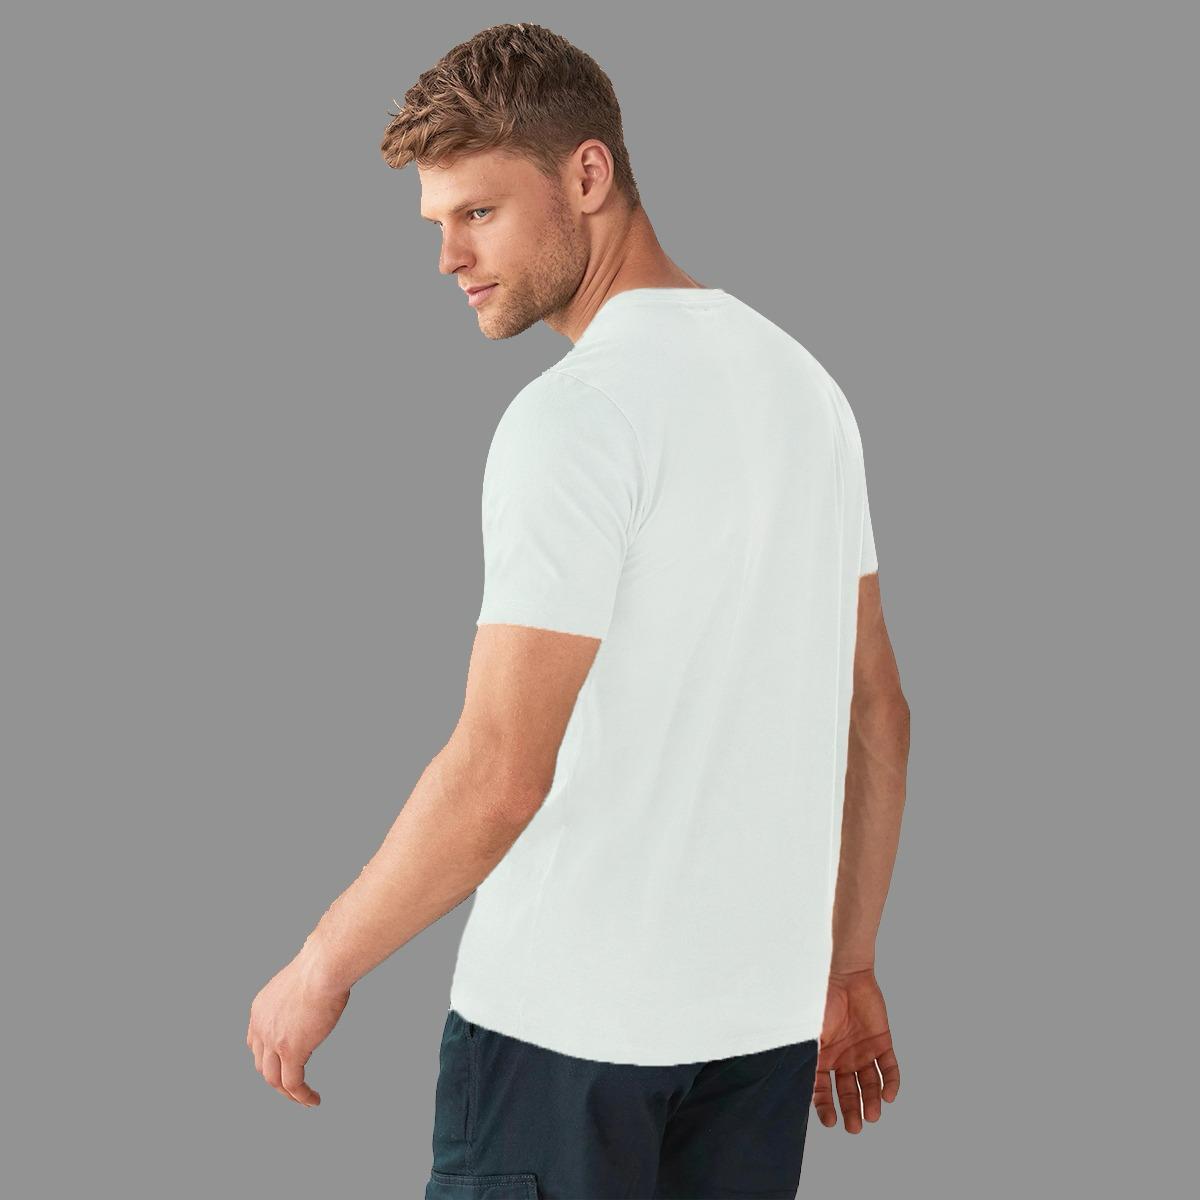 Branded Round Neck Fashion Tee Shirt - White